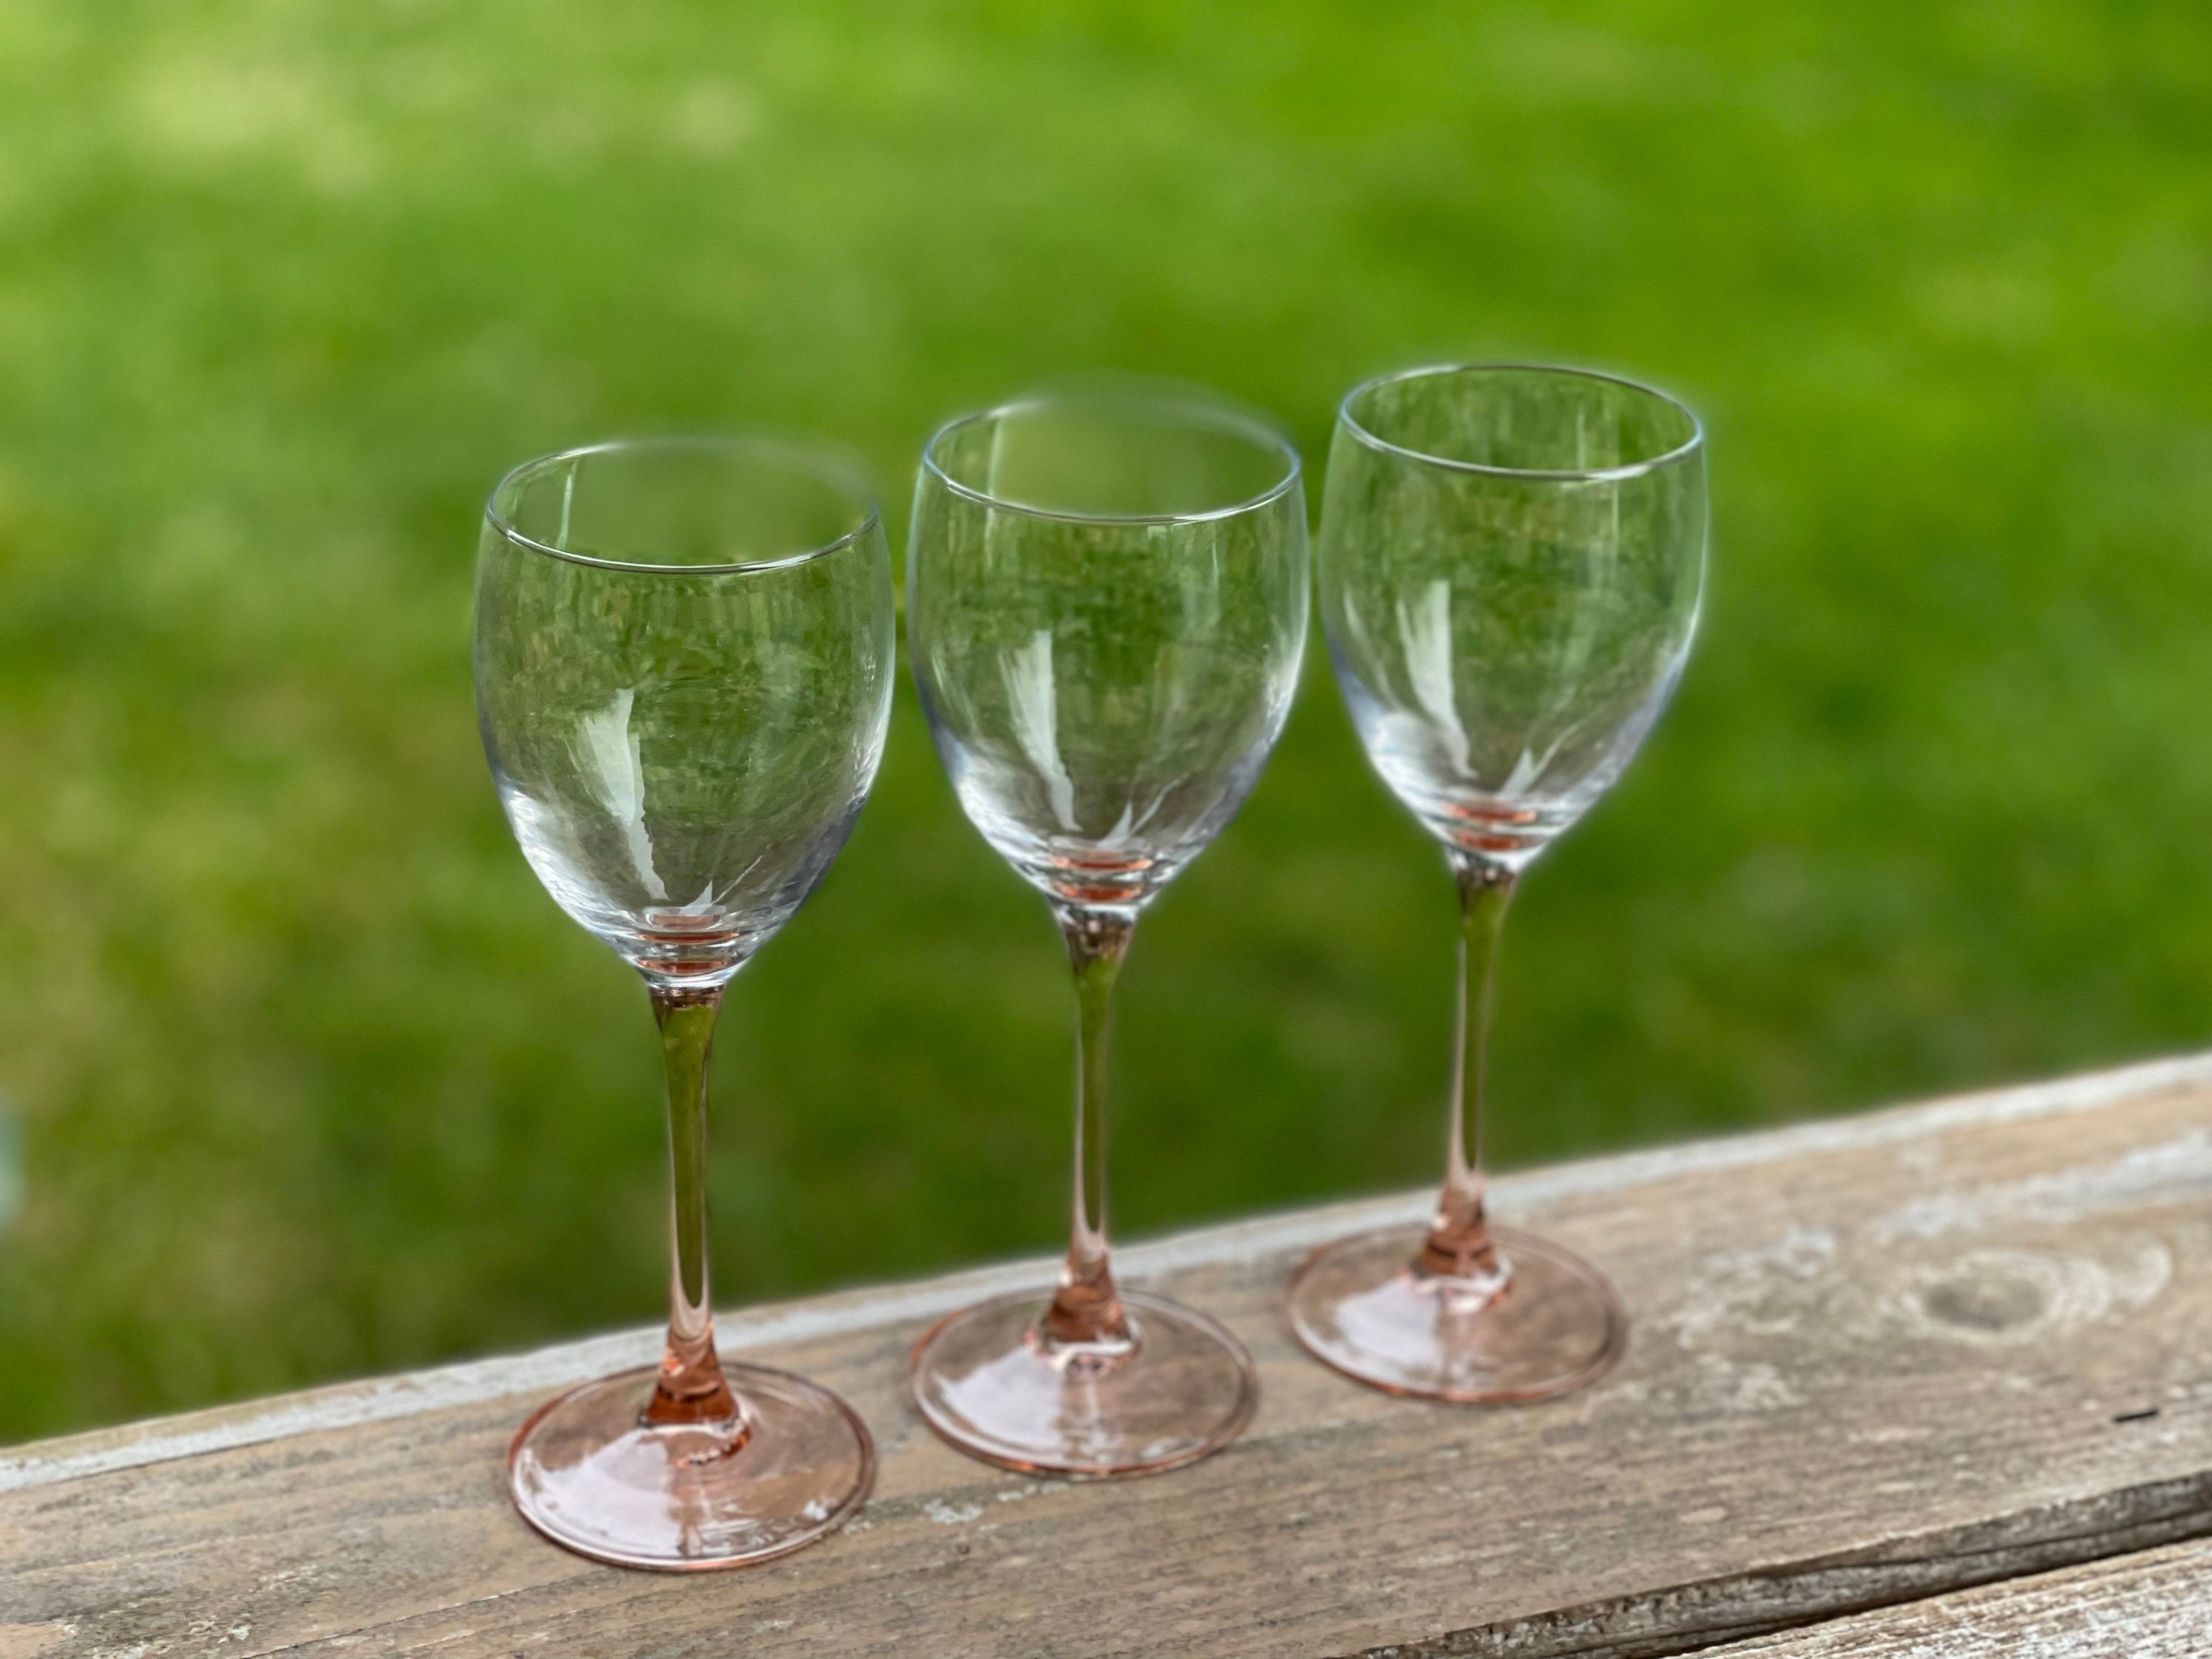 4 French Vintage 70s Luminarc Small Wine Glasses, Rosaline White